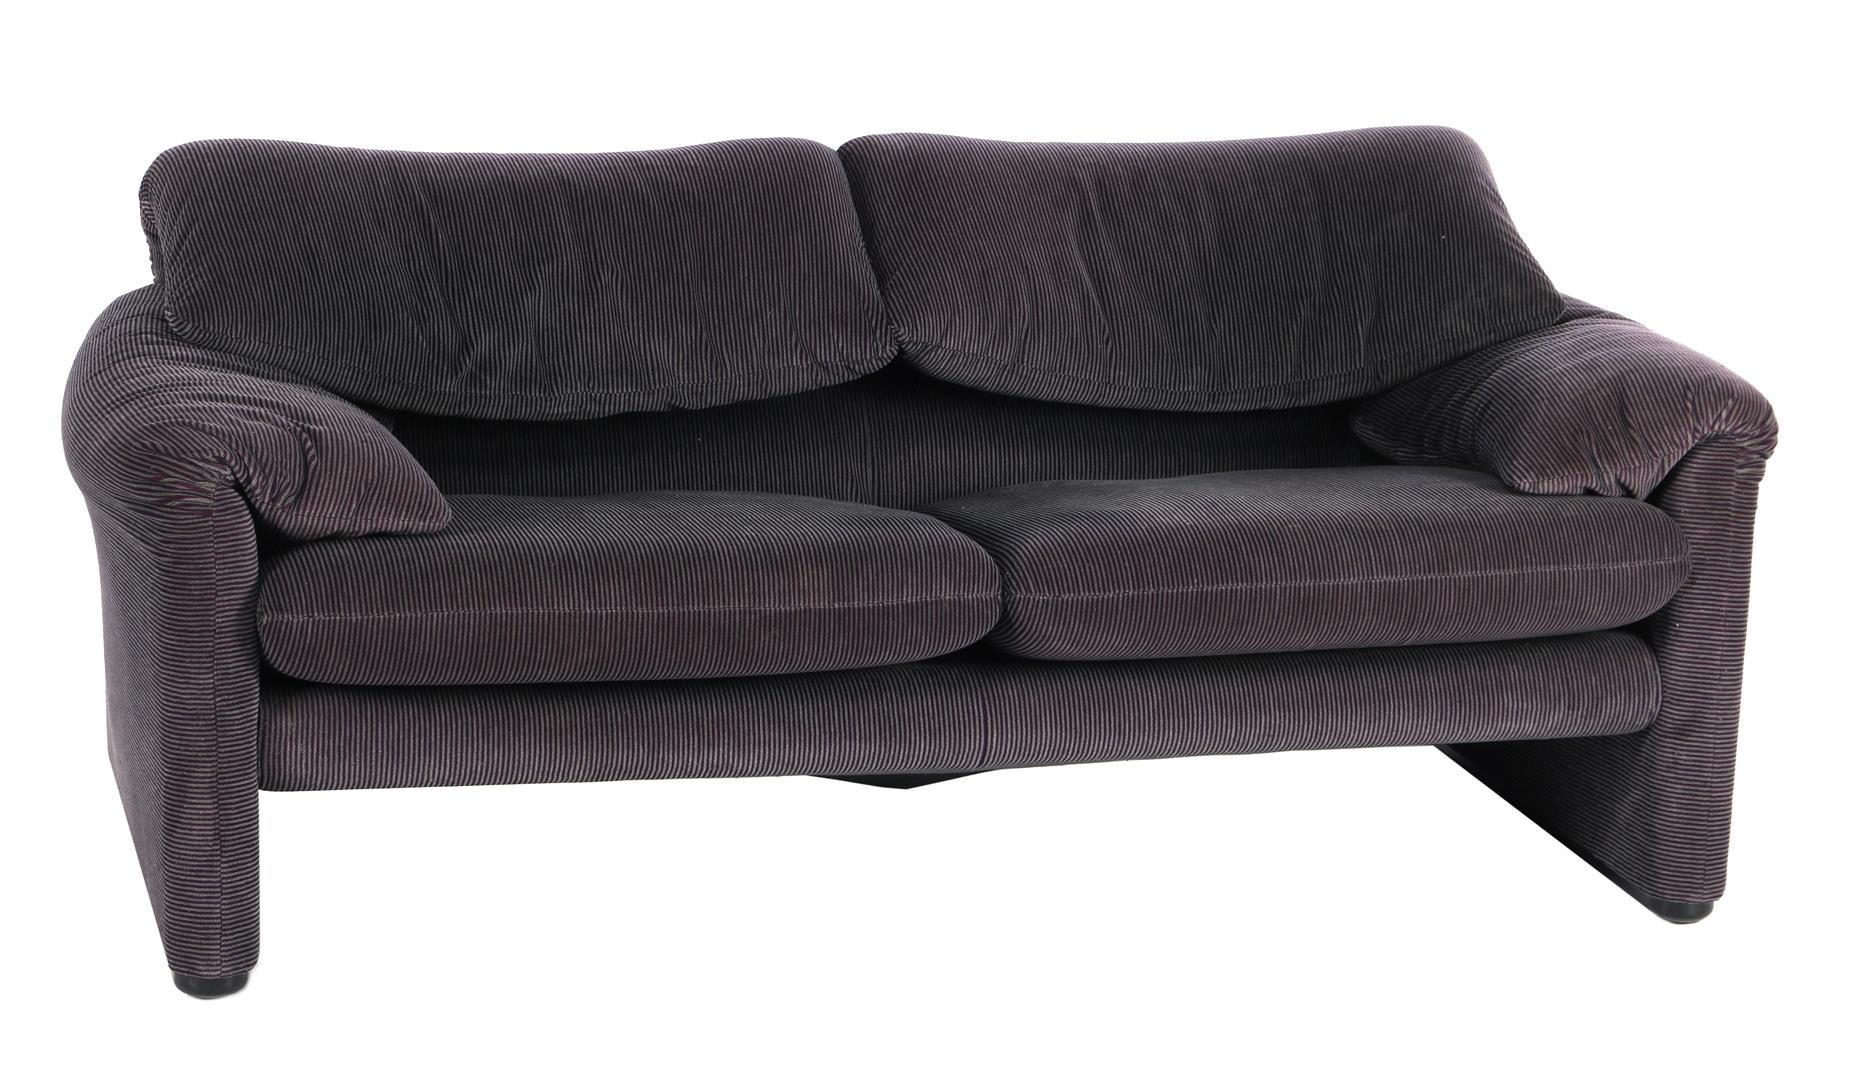 Vico Magistretti 维科-马吉斯特雷蒂（1920-2006）
紫色和灰色条纹双人座沙发，带折叠靠背和扶手，Vico Magistretti 为 C&hellip;